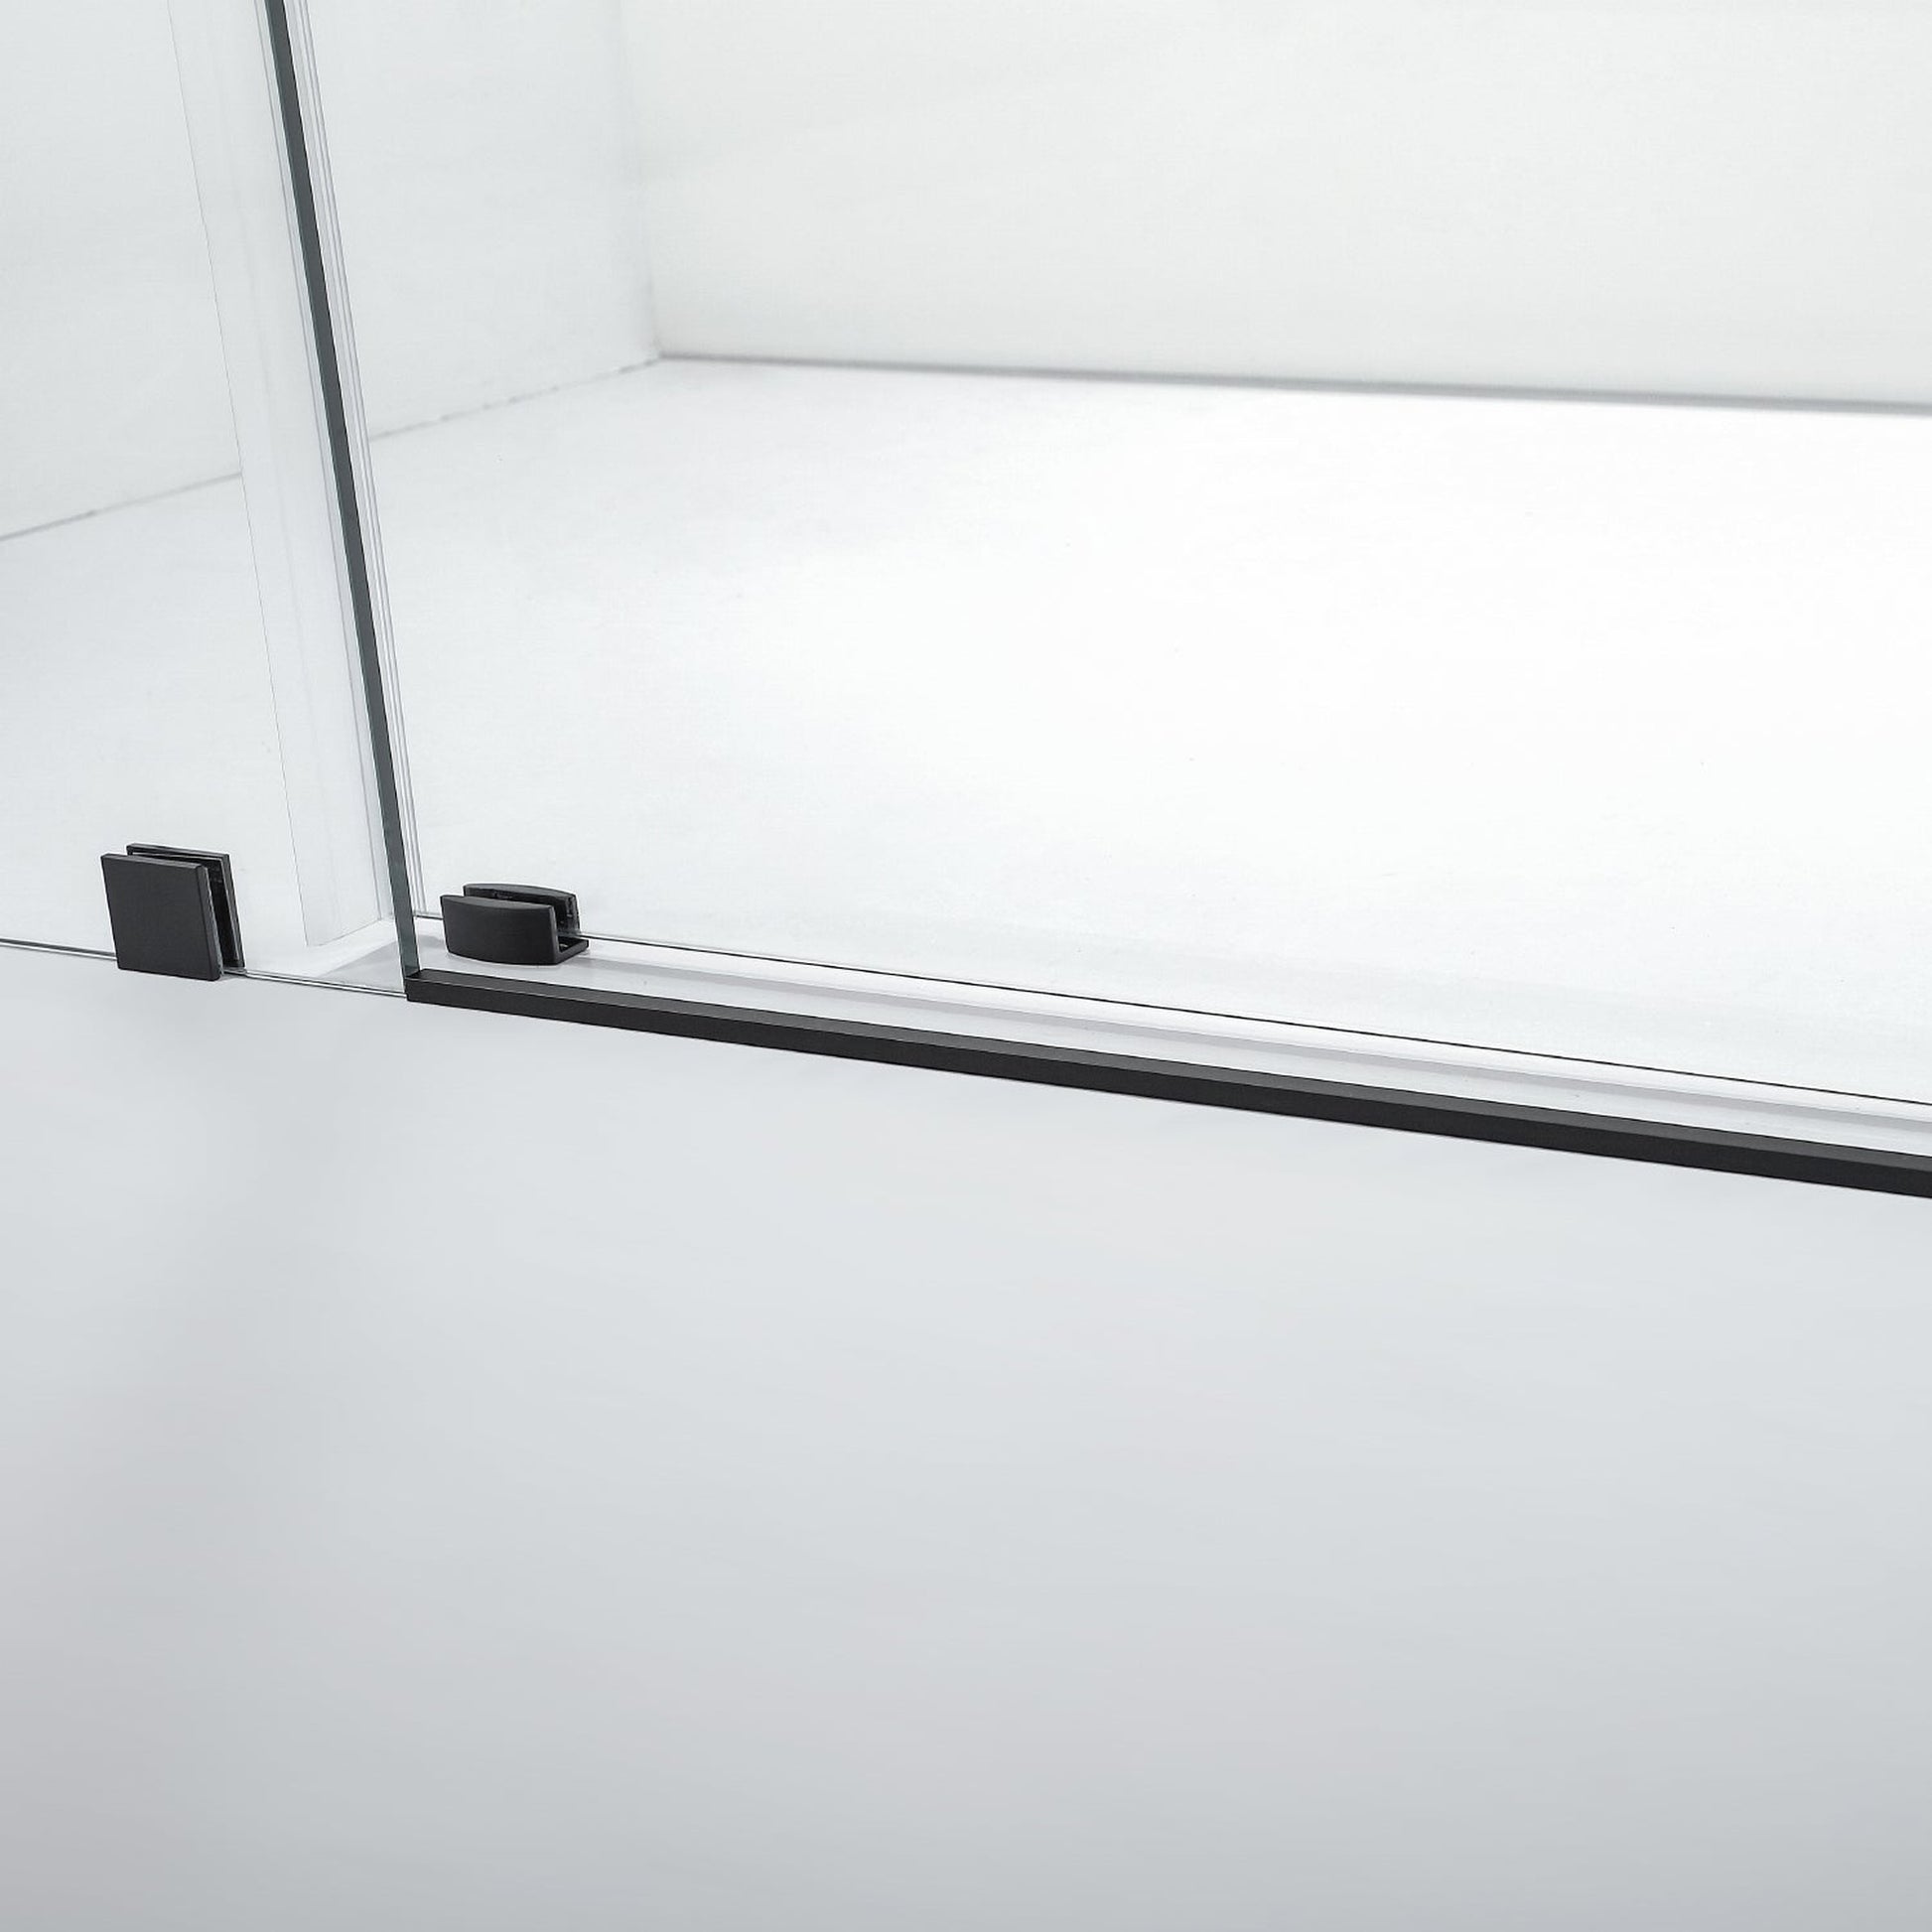 Villena Rectangle Single Sliding Frameless Shower Enclosure